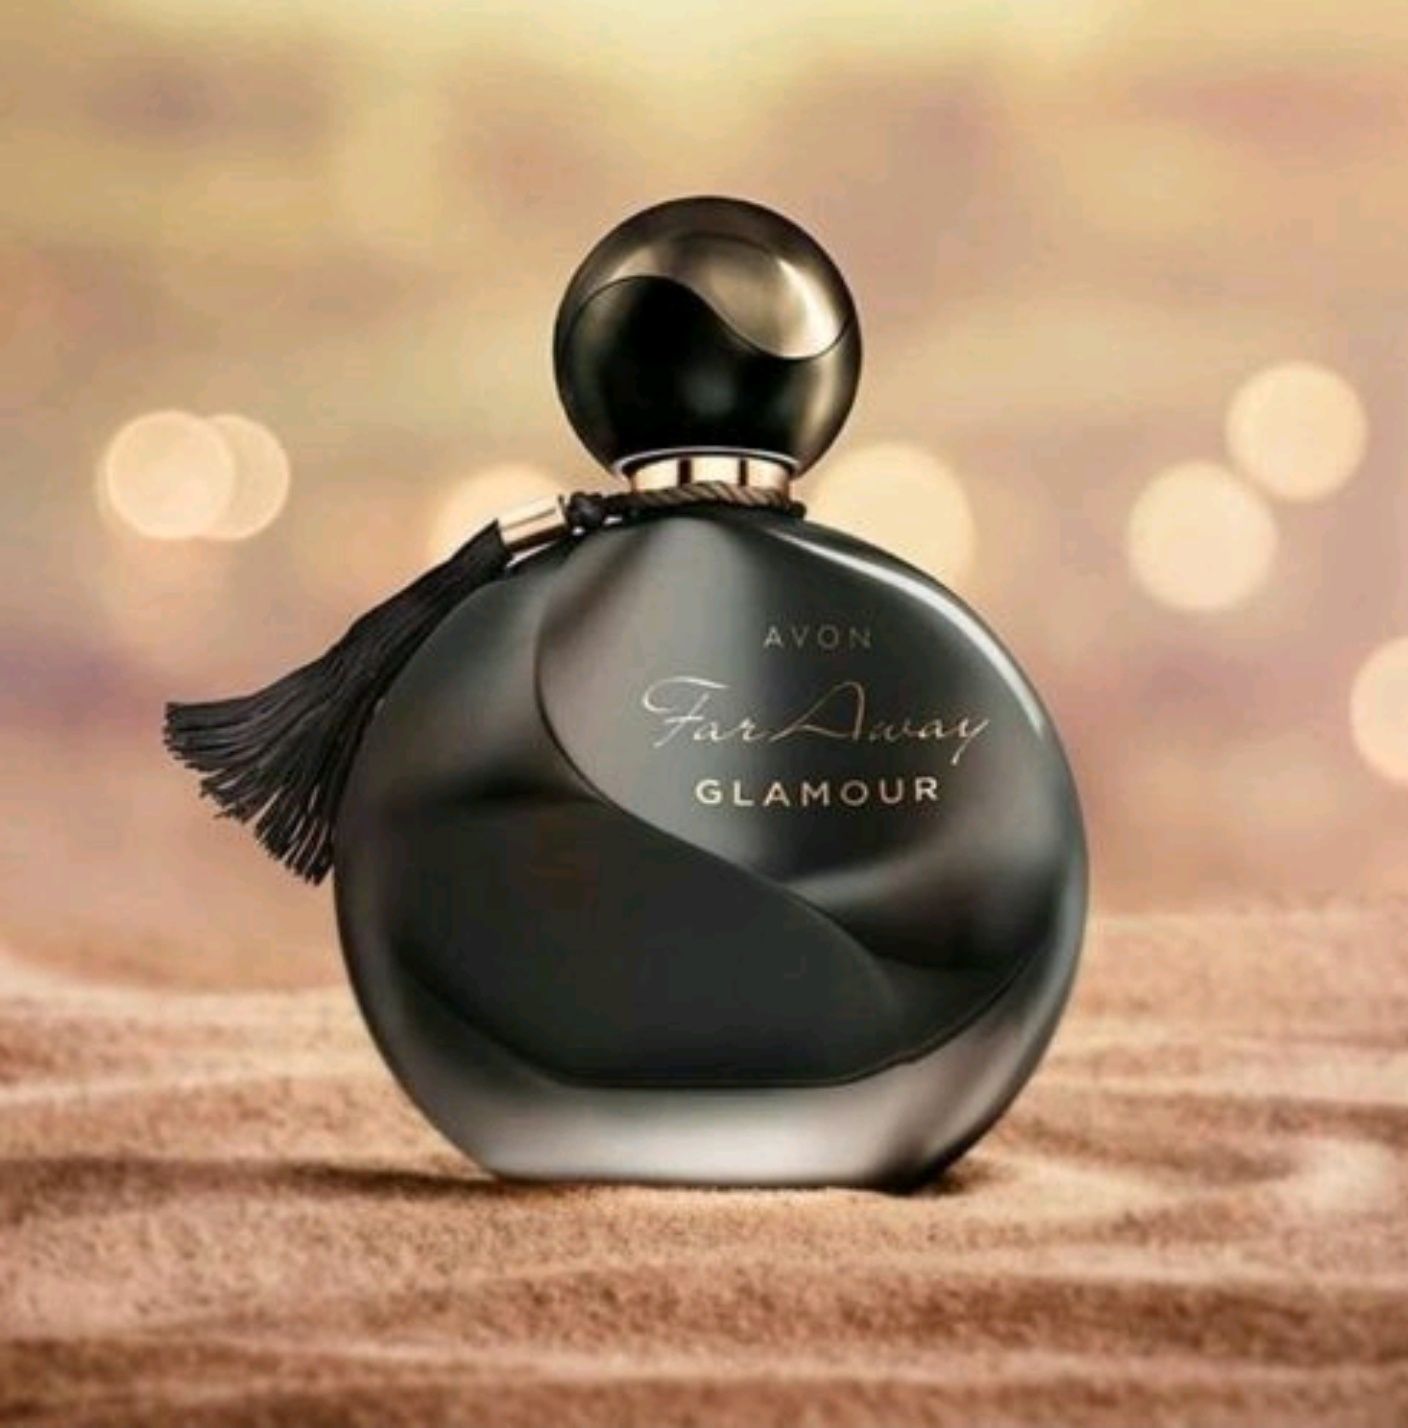 Far Away Infinity Avon perfume - a fragrance for women 2016